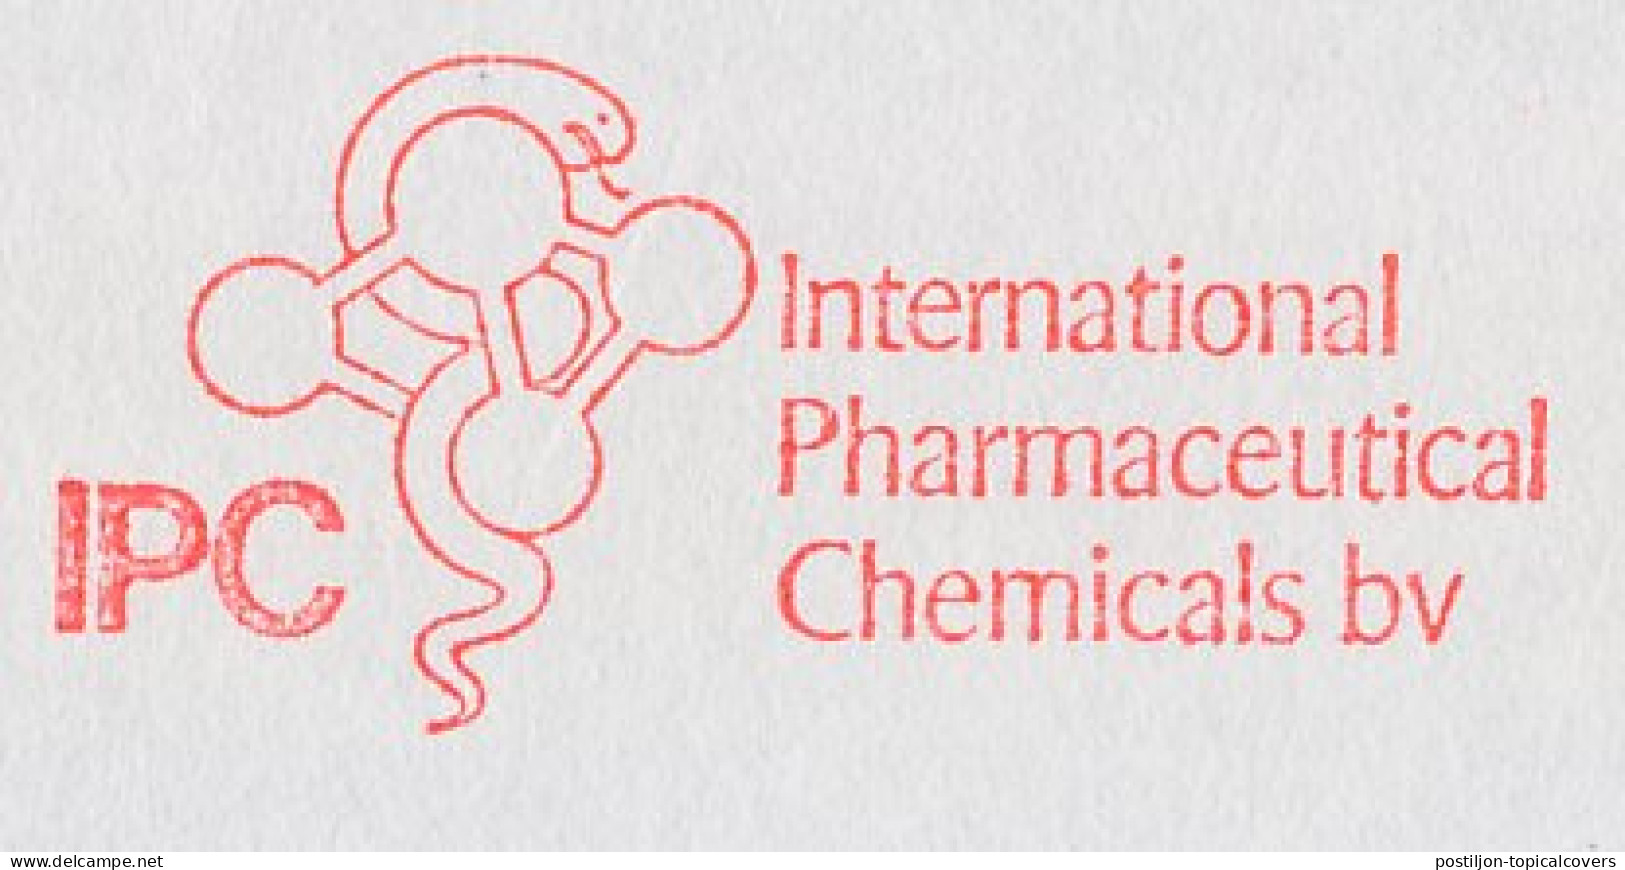 Meter Cover Netherlands 1990 IPC - International Pharmaceutical Chemicals - Apotheek